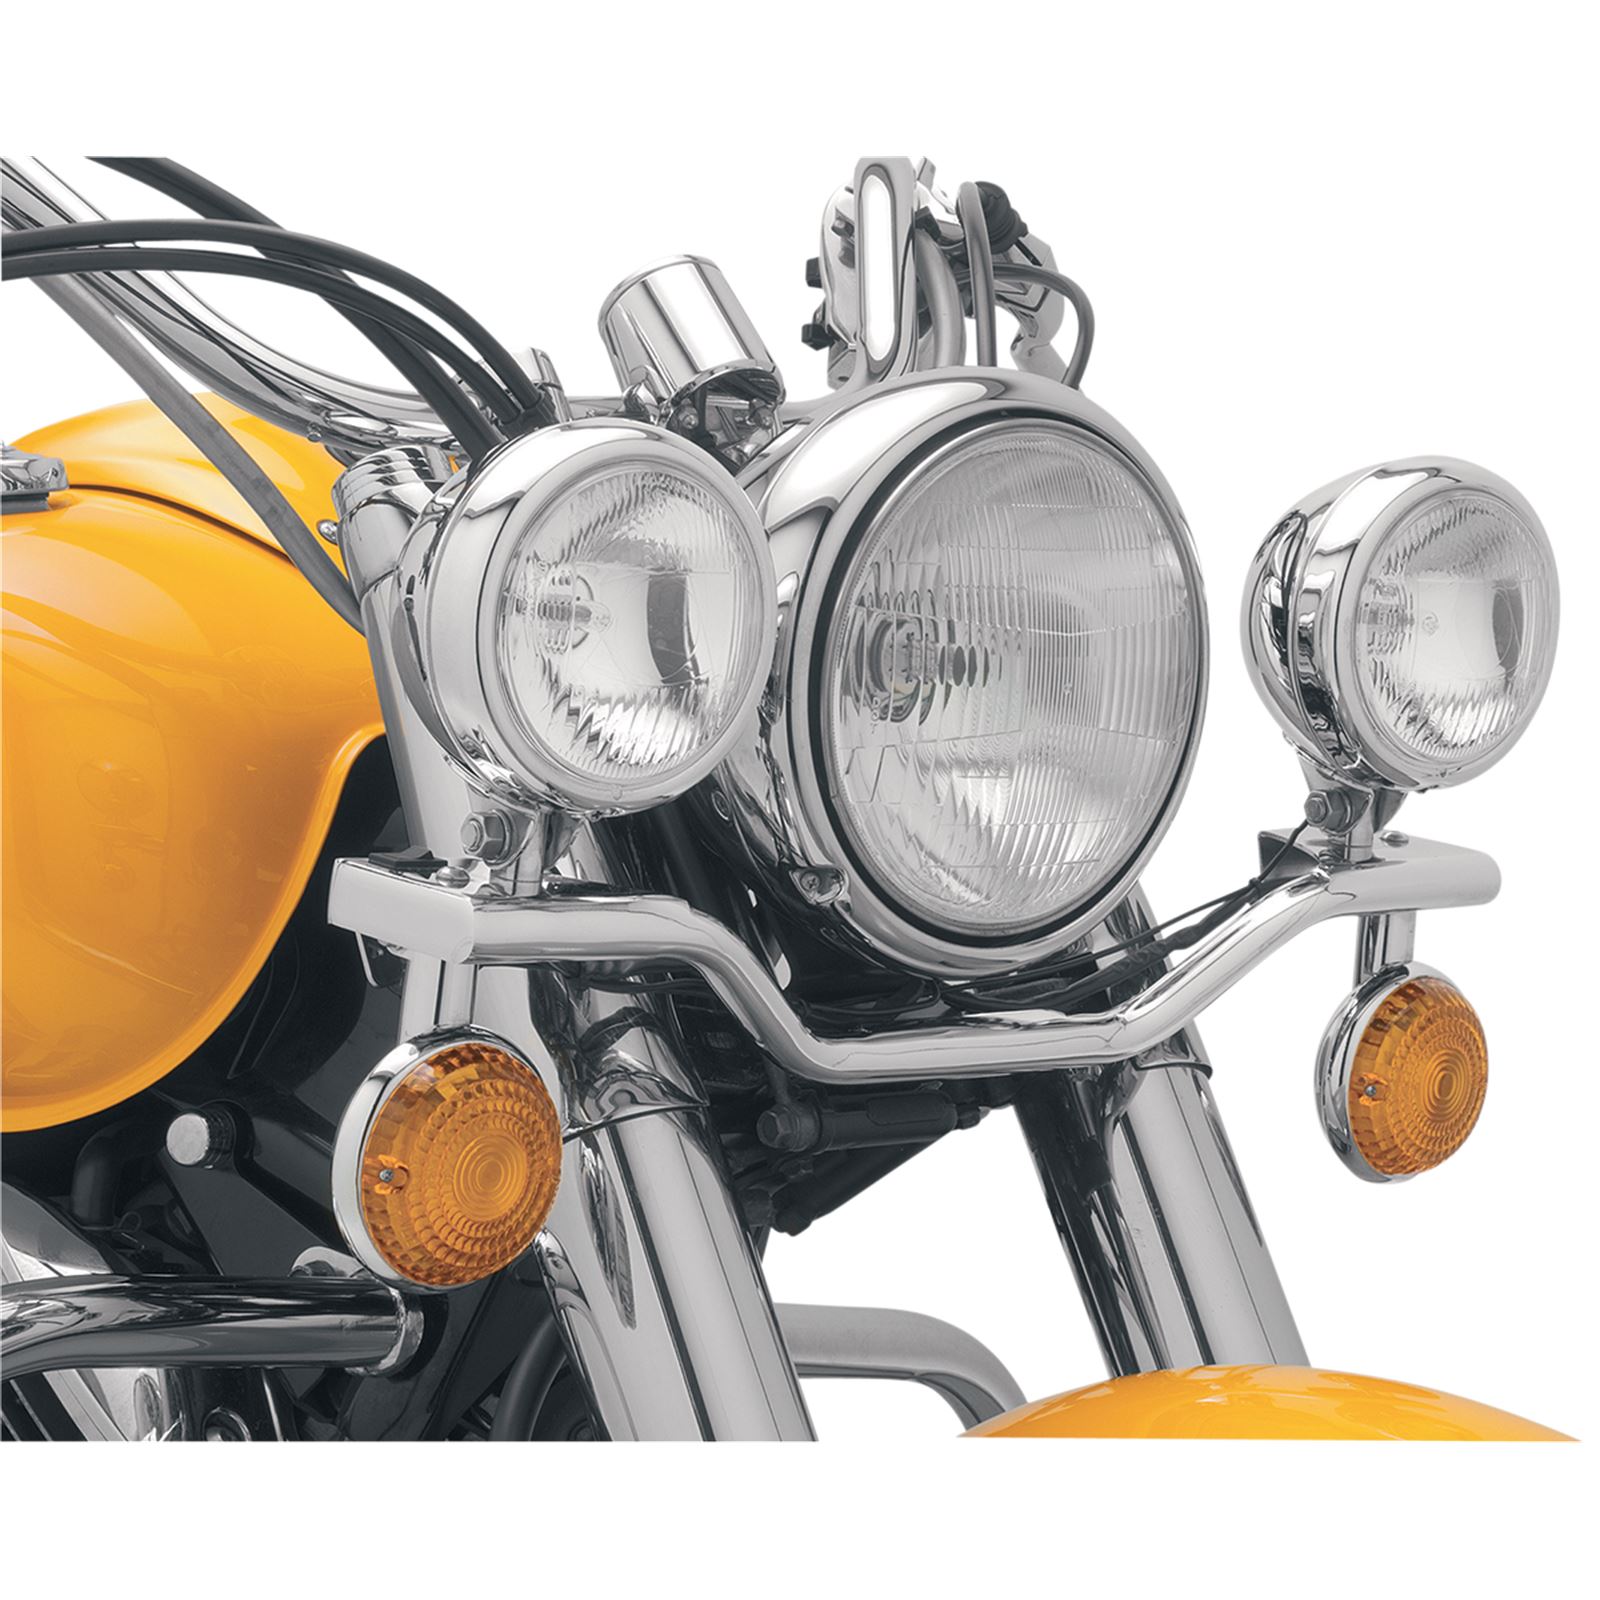 Cobra Lightbar - XVS1100 Classic - Motorcycle, ATV / UTV & Powersports Parts | The Best Powersports, ATV & Snow Gear, Accessories and More